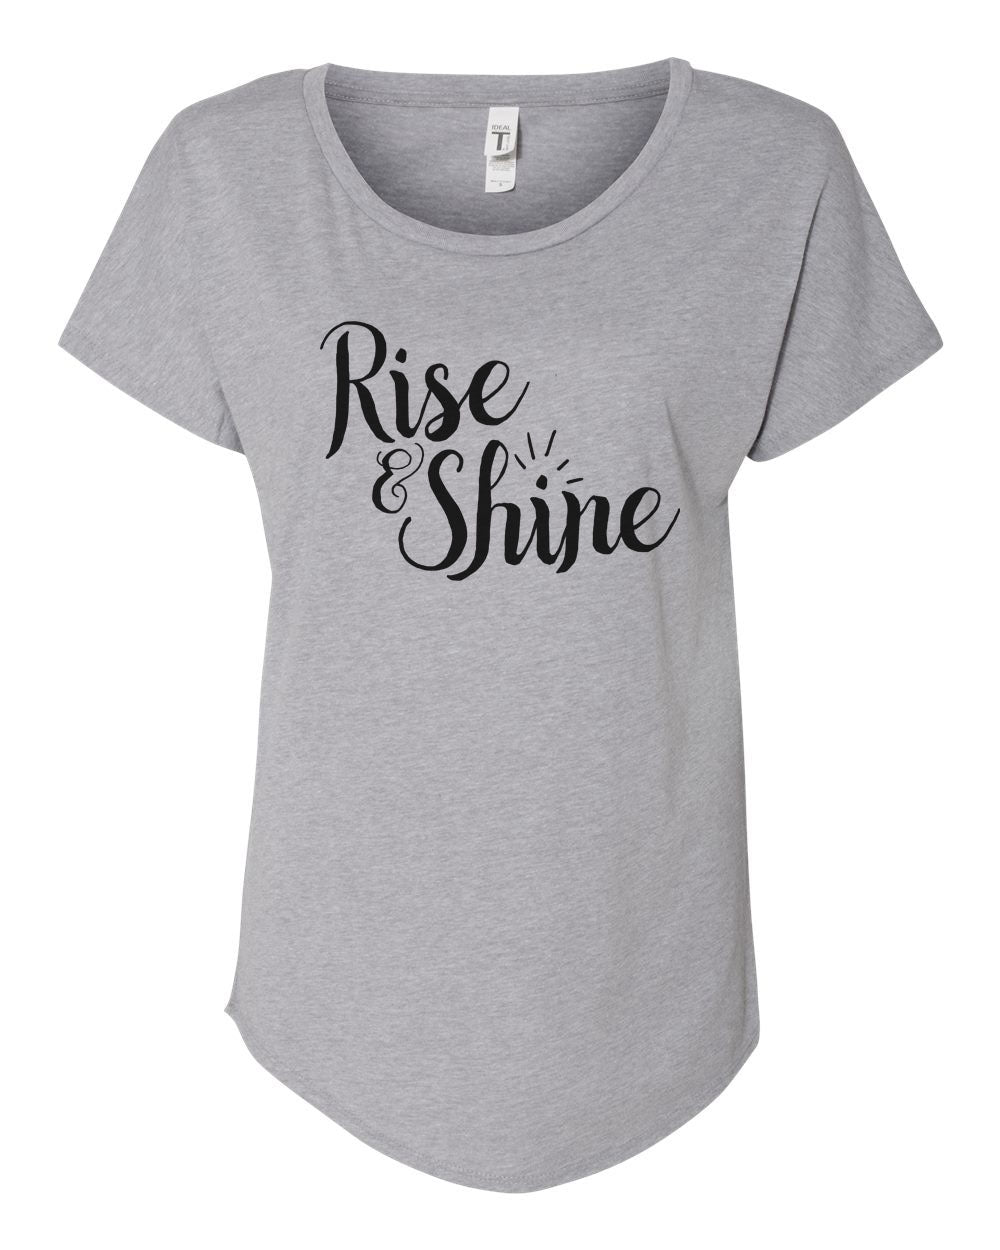 Rise & Shine Ladies Tee Shirt - In Grey & White